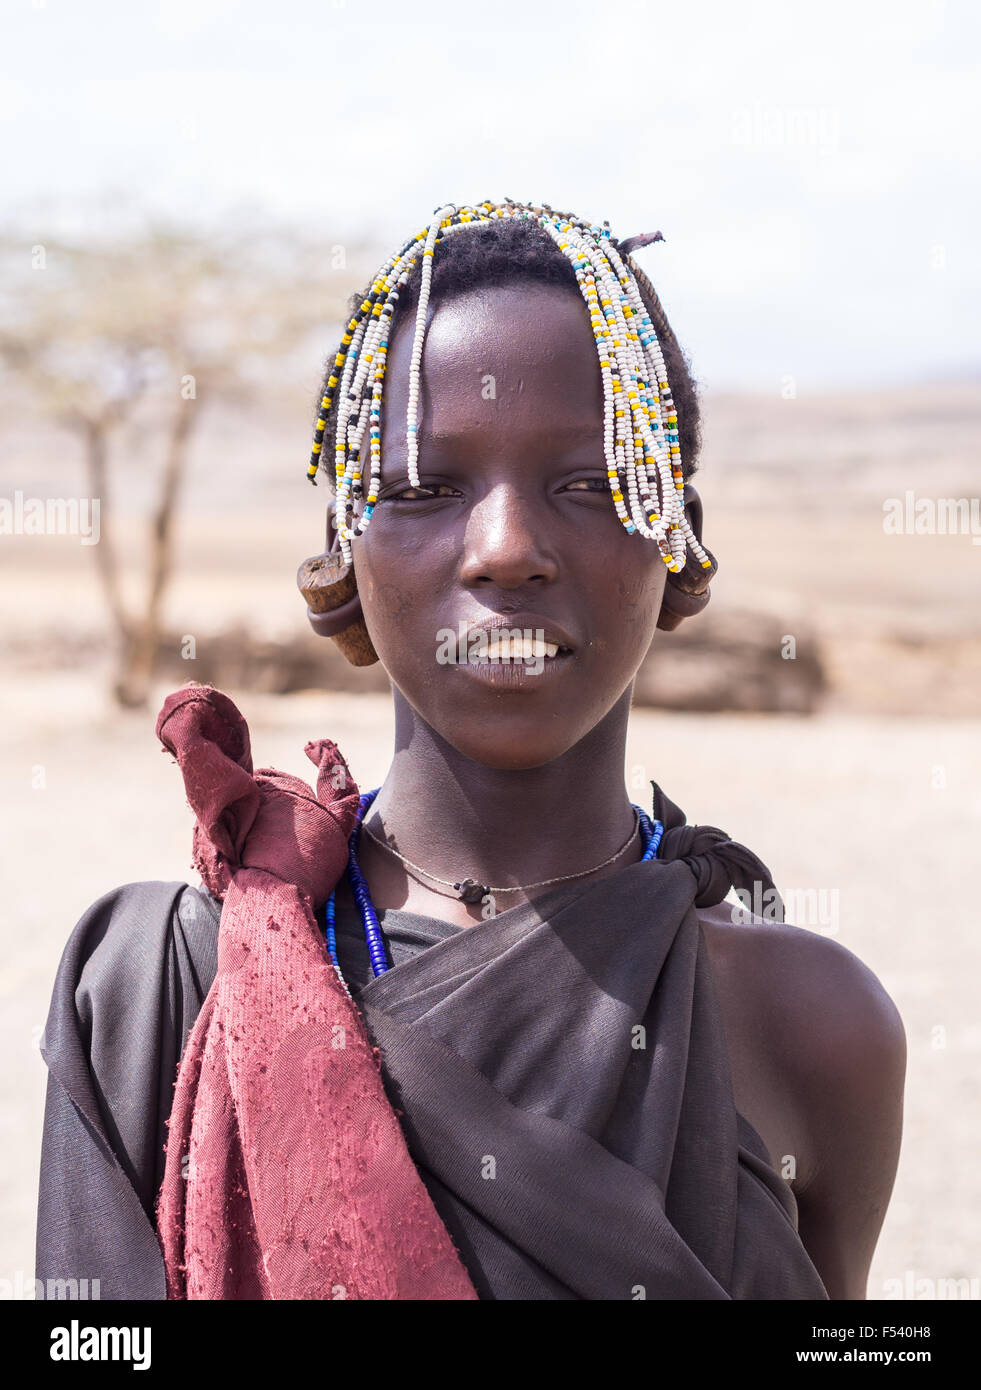 Maasai young girl in Arusha region, Tanzania, Africa. Stock Photo